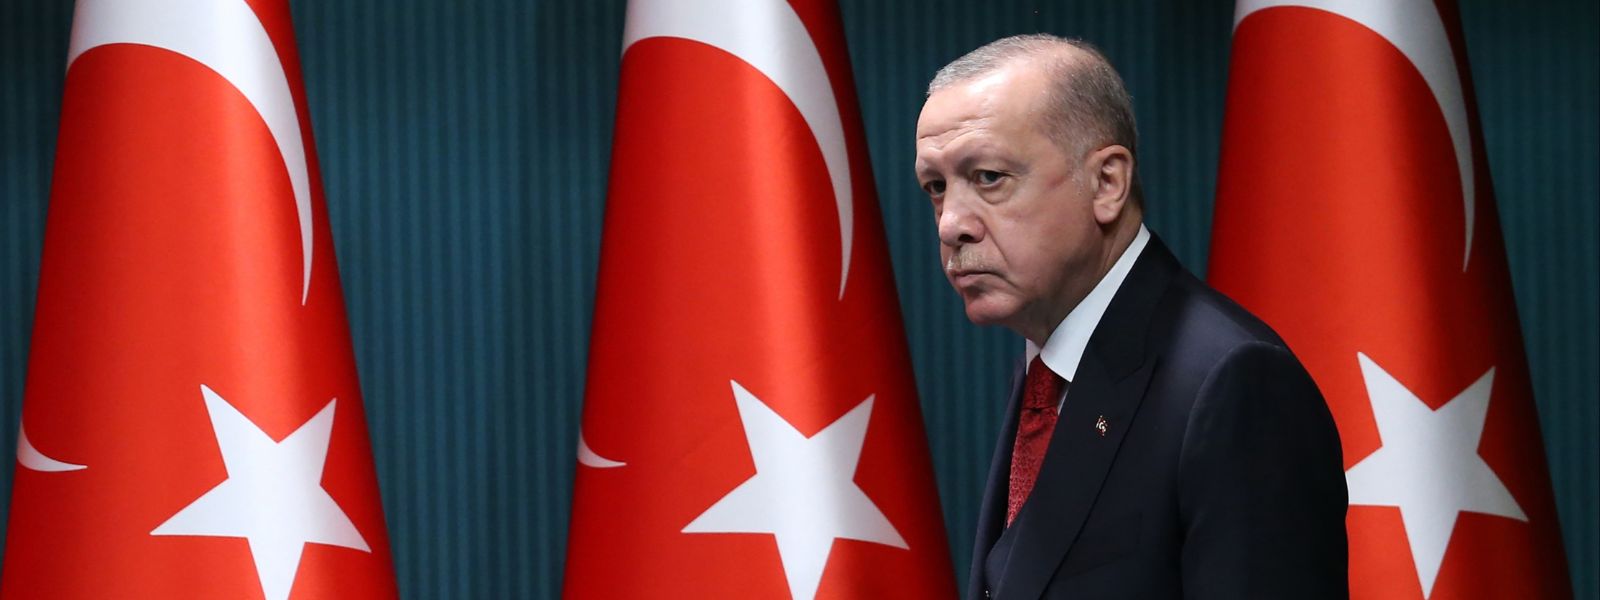 Turkiye President: No delay in May 14 elections